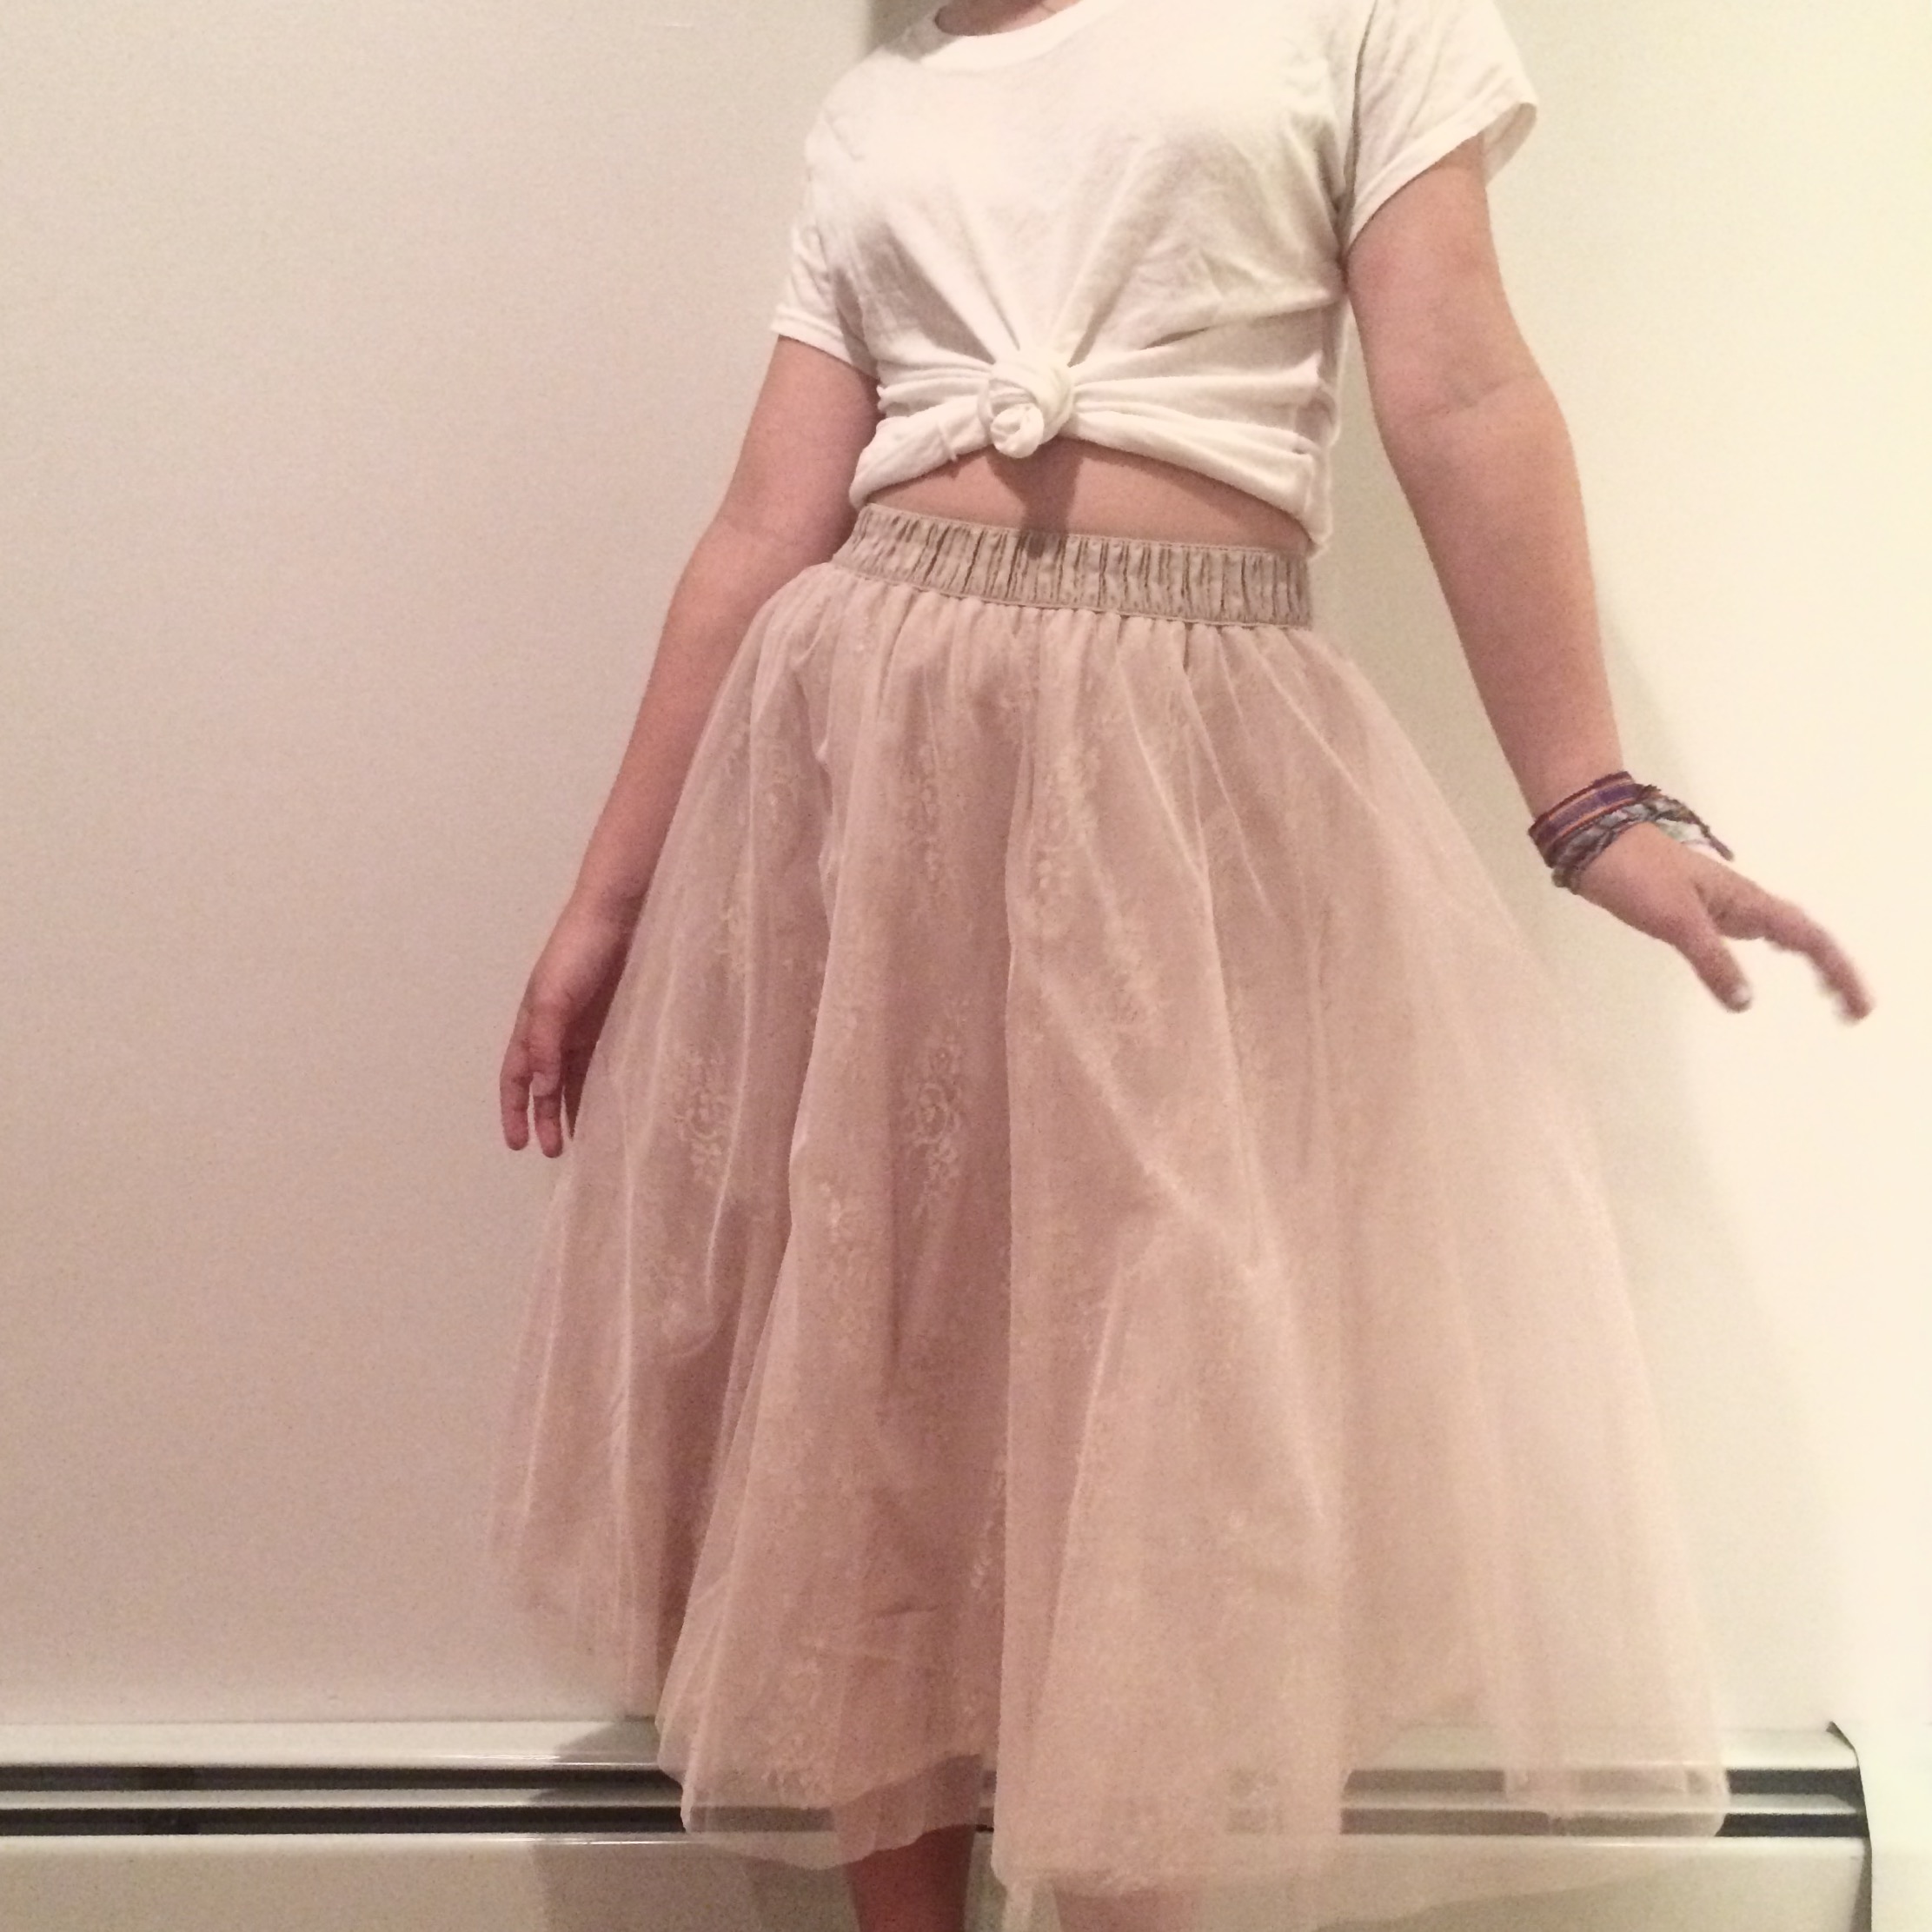 Skirt- $44 Francesca's Shirt- Brandy Melville Shoes- high tope Conveerse